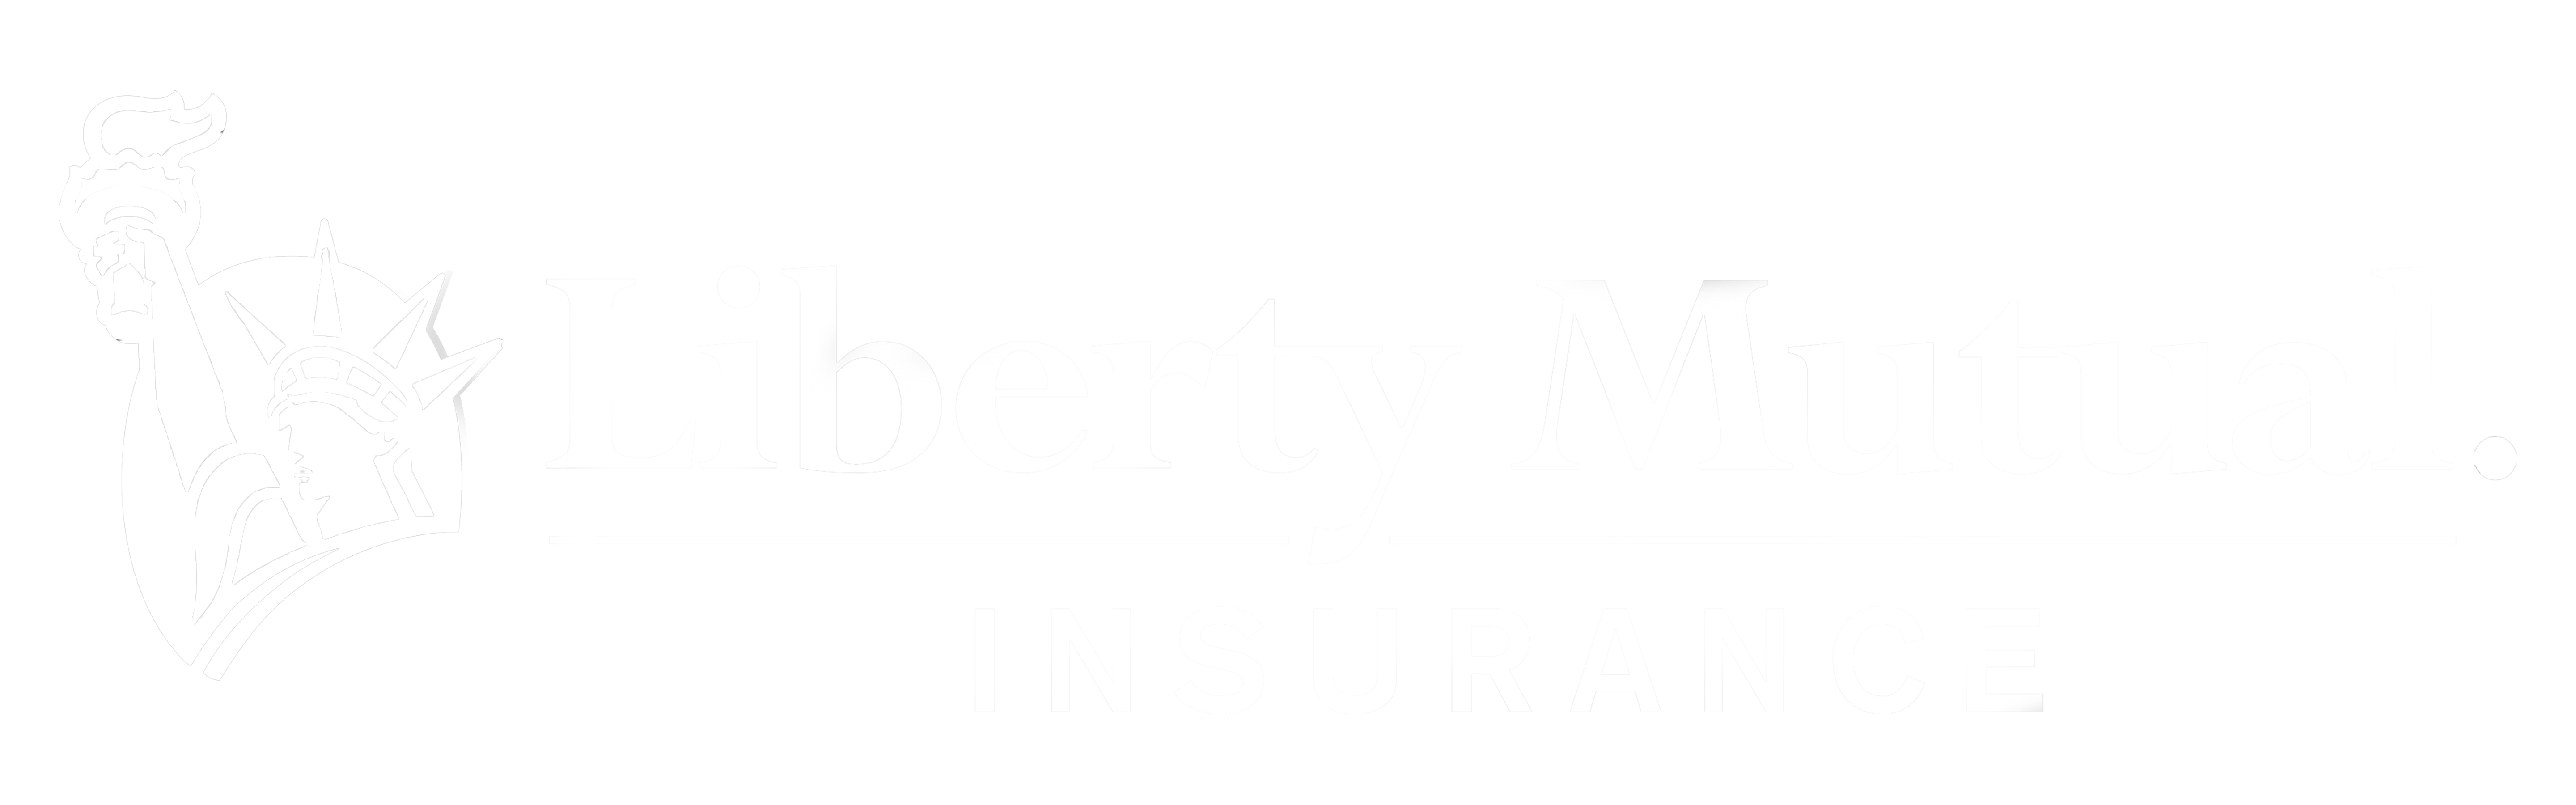 liberty-mutual-white-logo-1